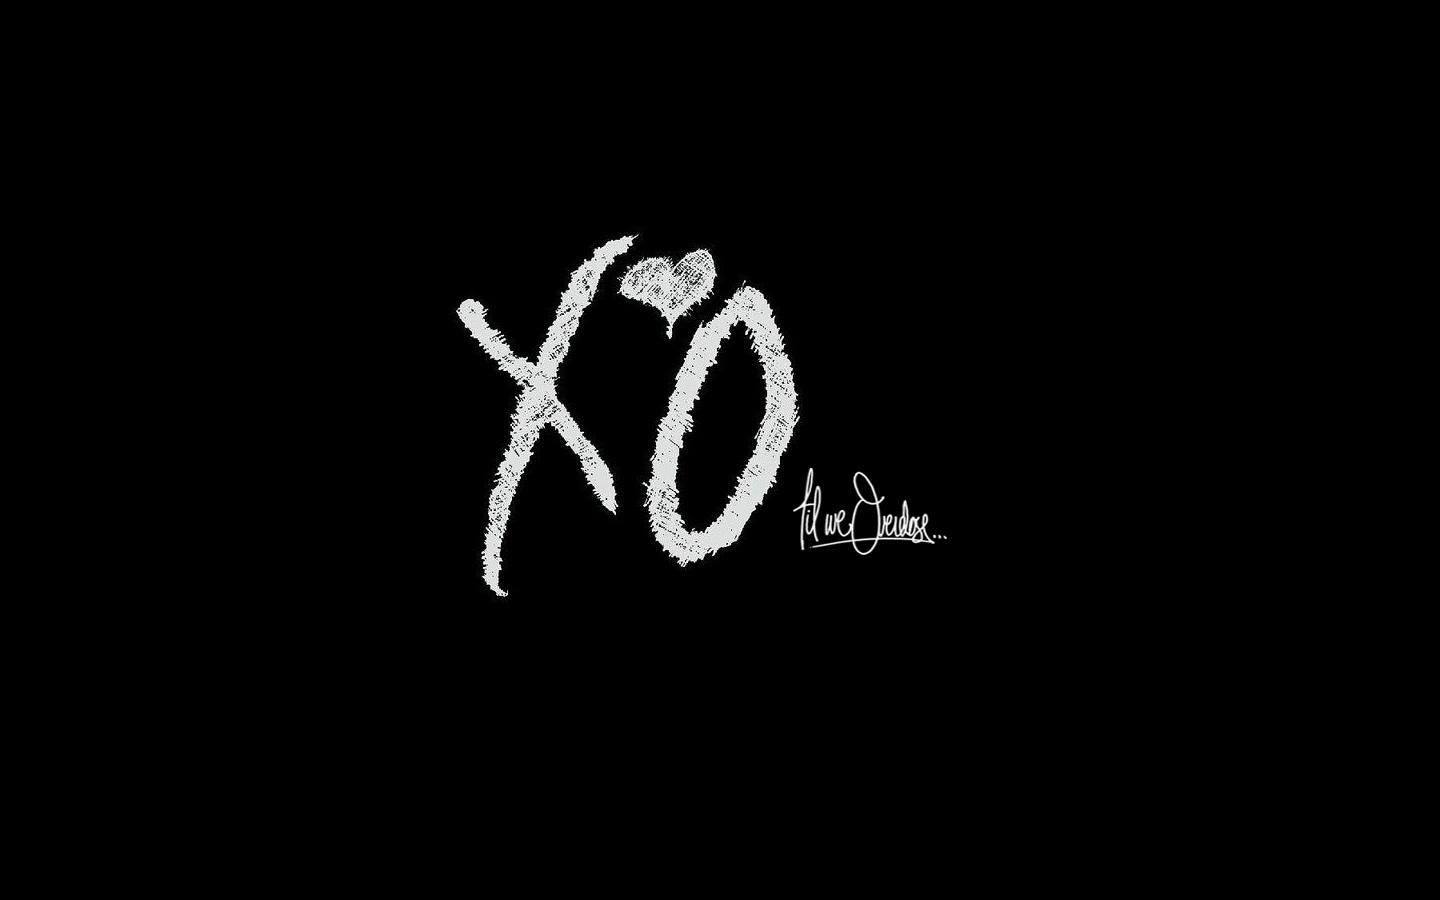 Xo Wallpaper The Weeknd Iphone